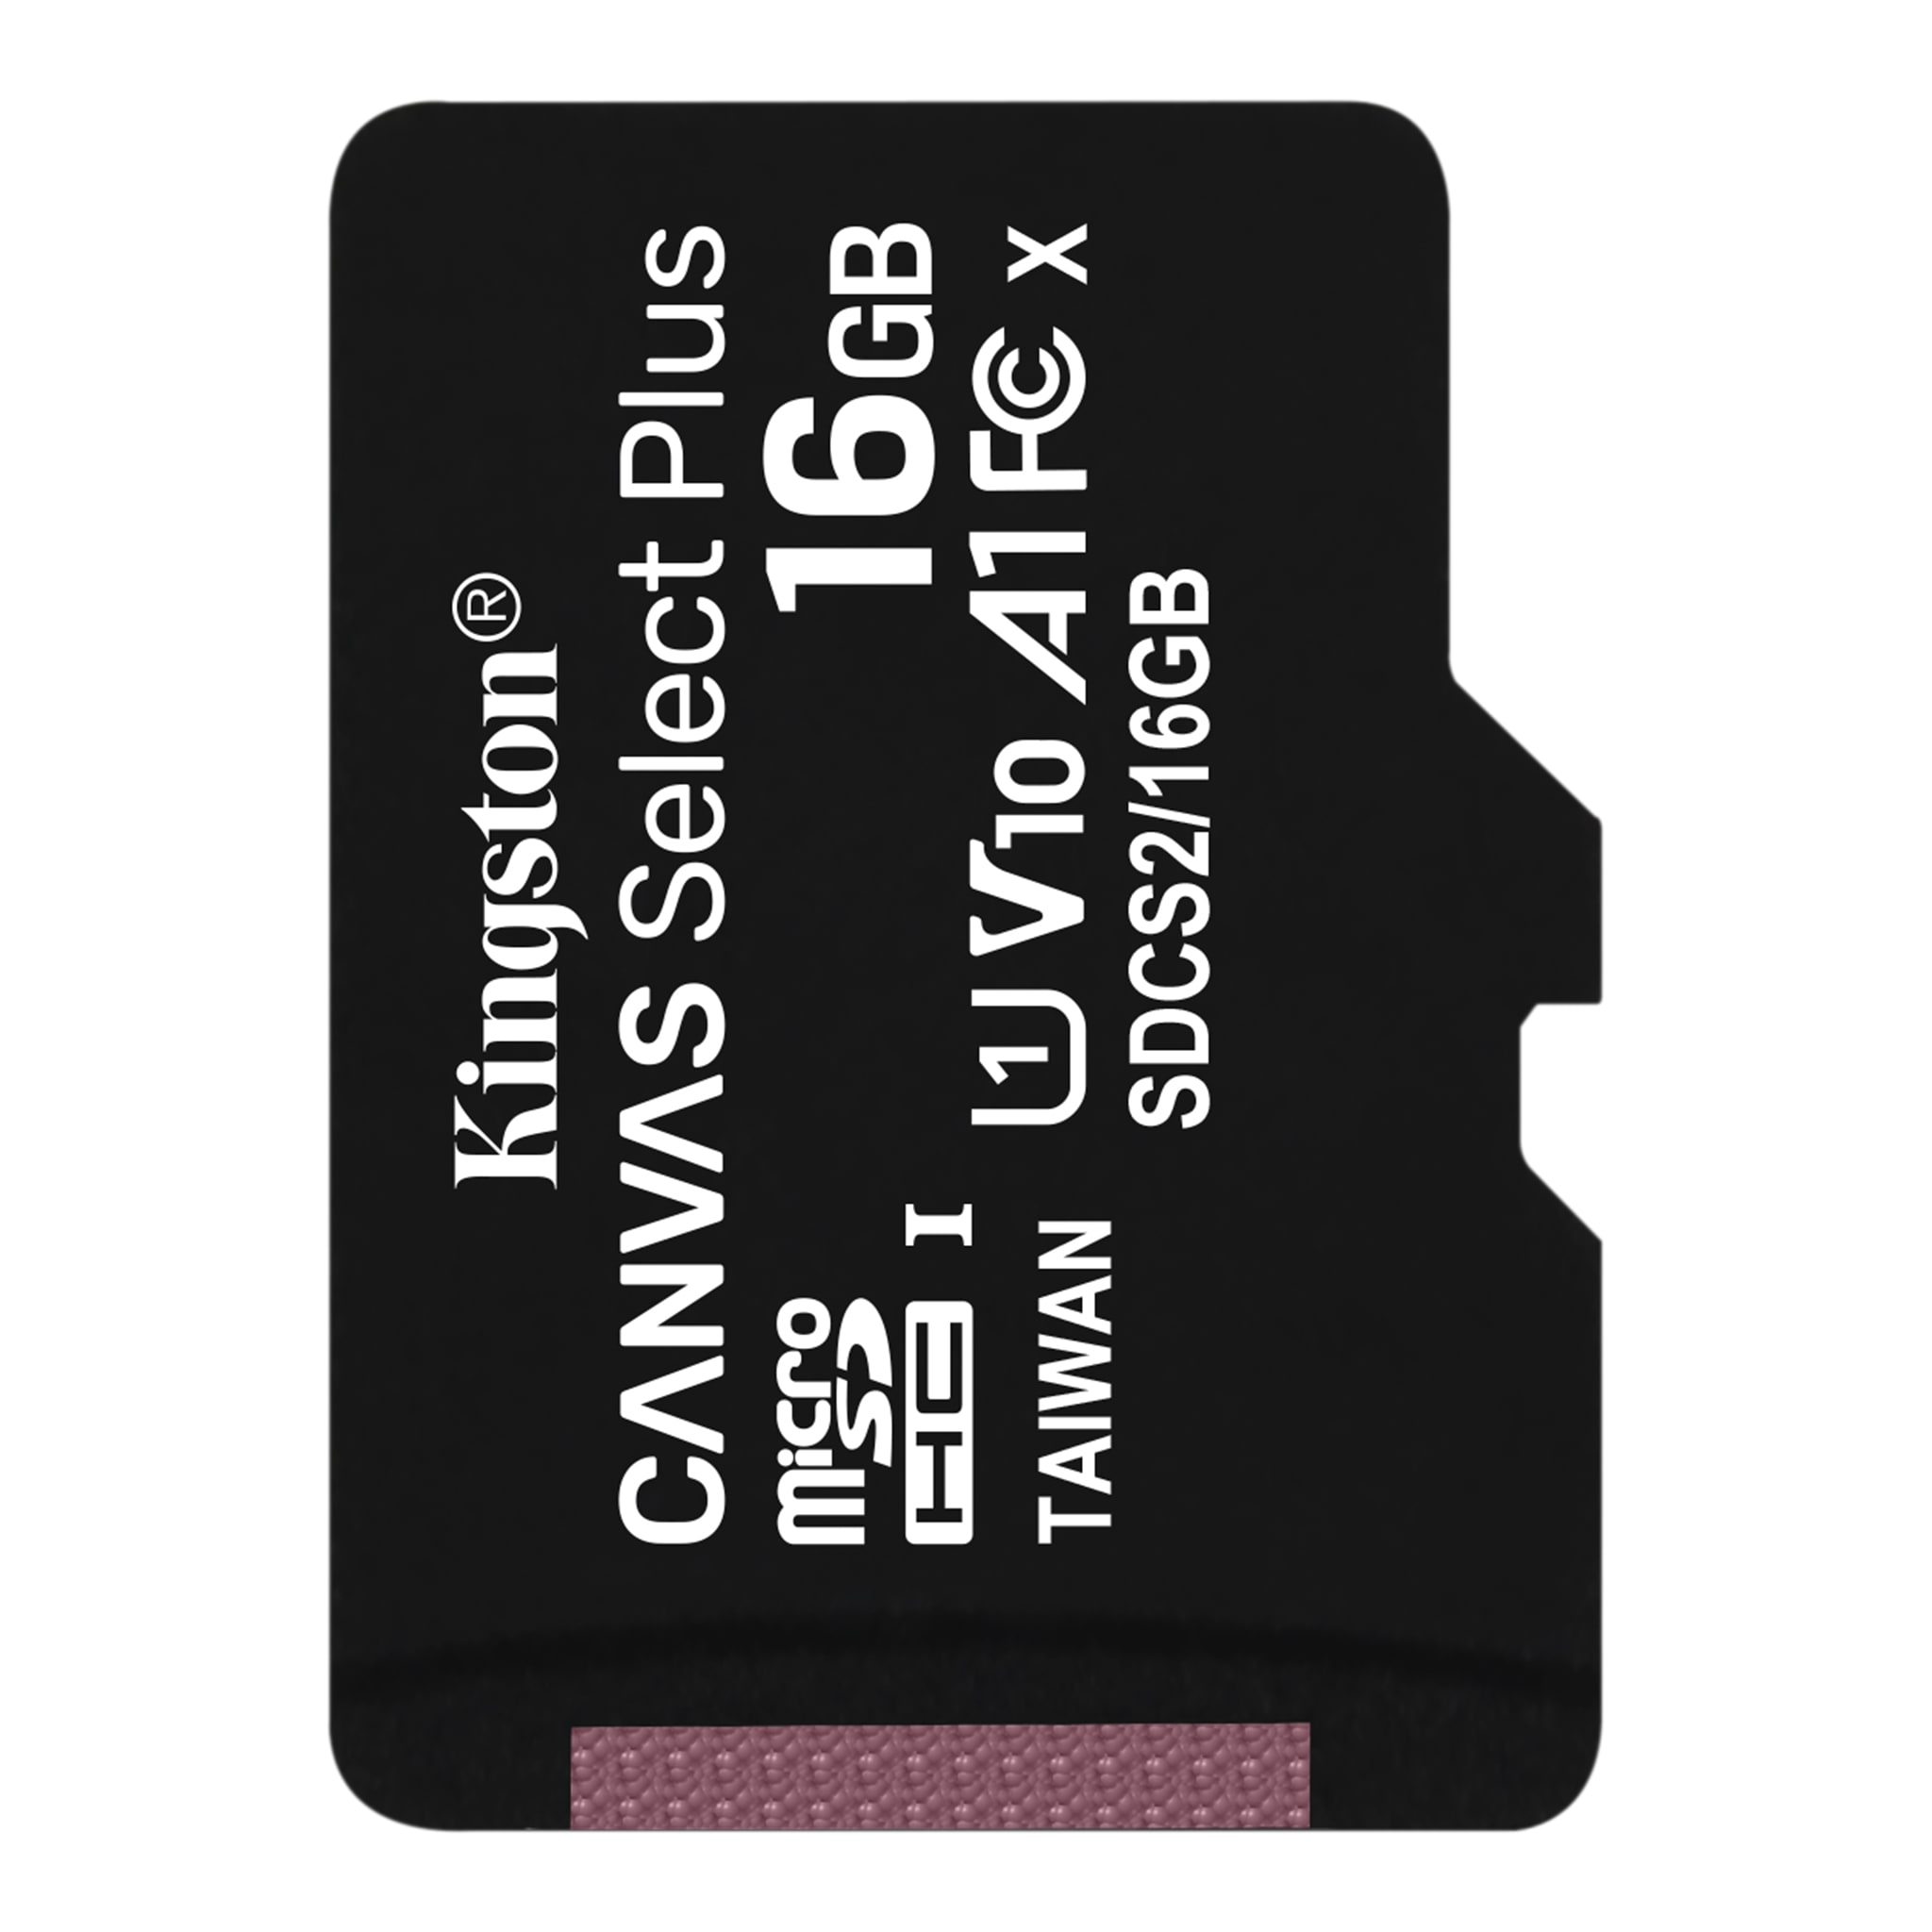 Kingston 128GB Huawei nova 3 MicroSDXC Canvas Select Plus Card Verified by SanFlash. 100MBs Works with Kingston